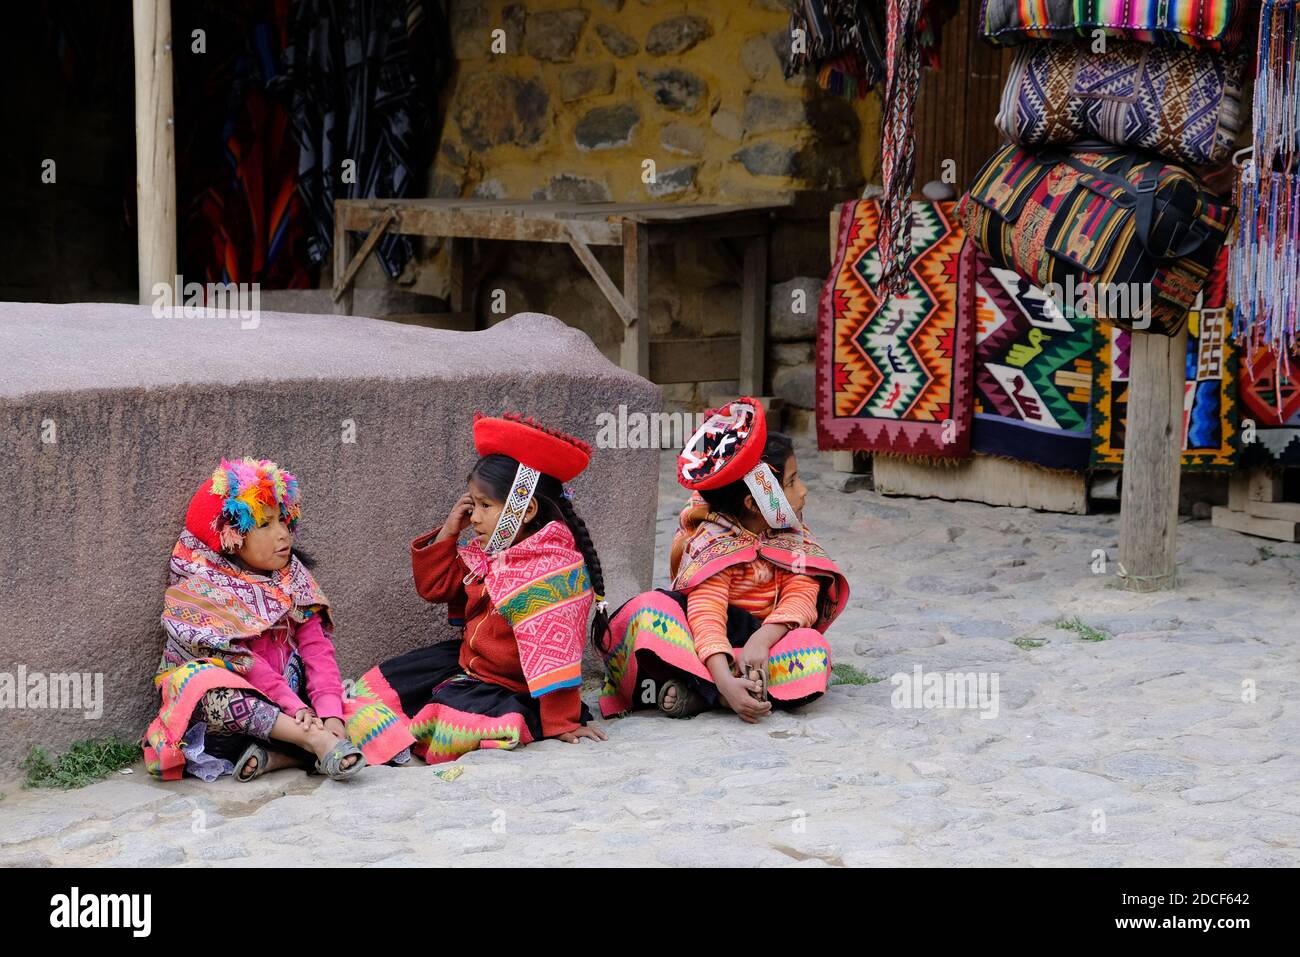 Perù Valle Sacra Ollantaytambo - Ollantaytambo bambini in abito tradizionale Foto Stock